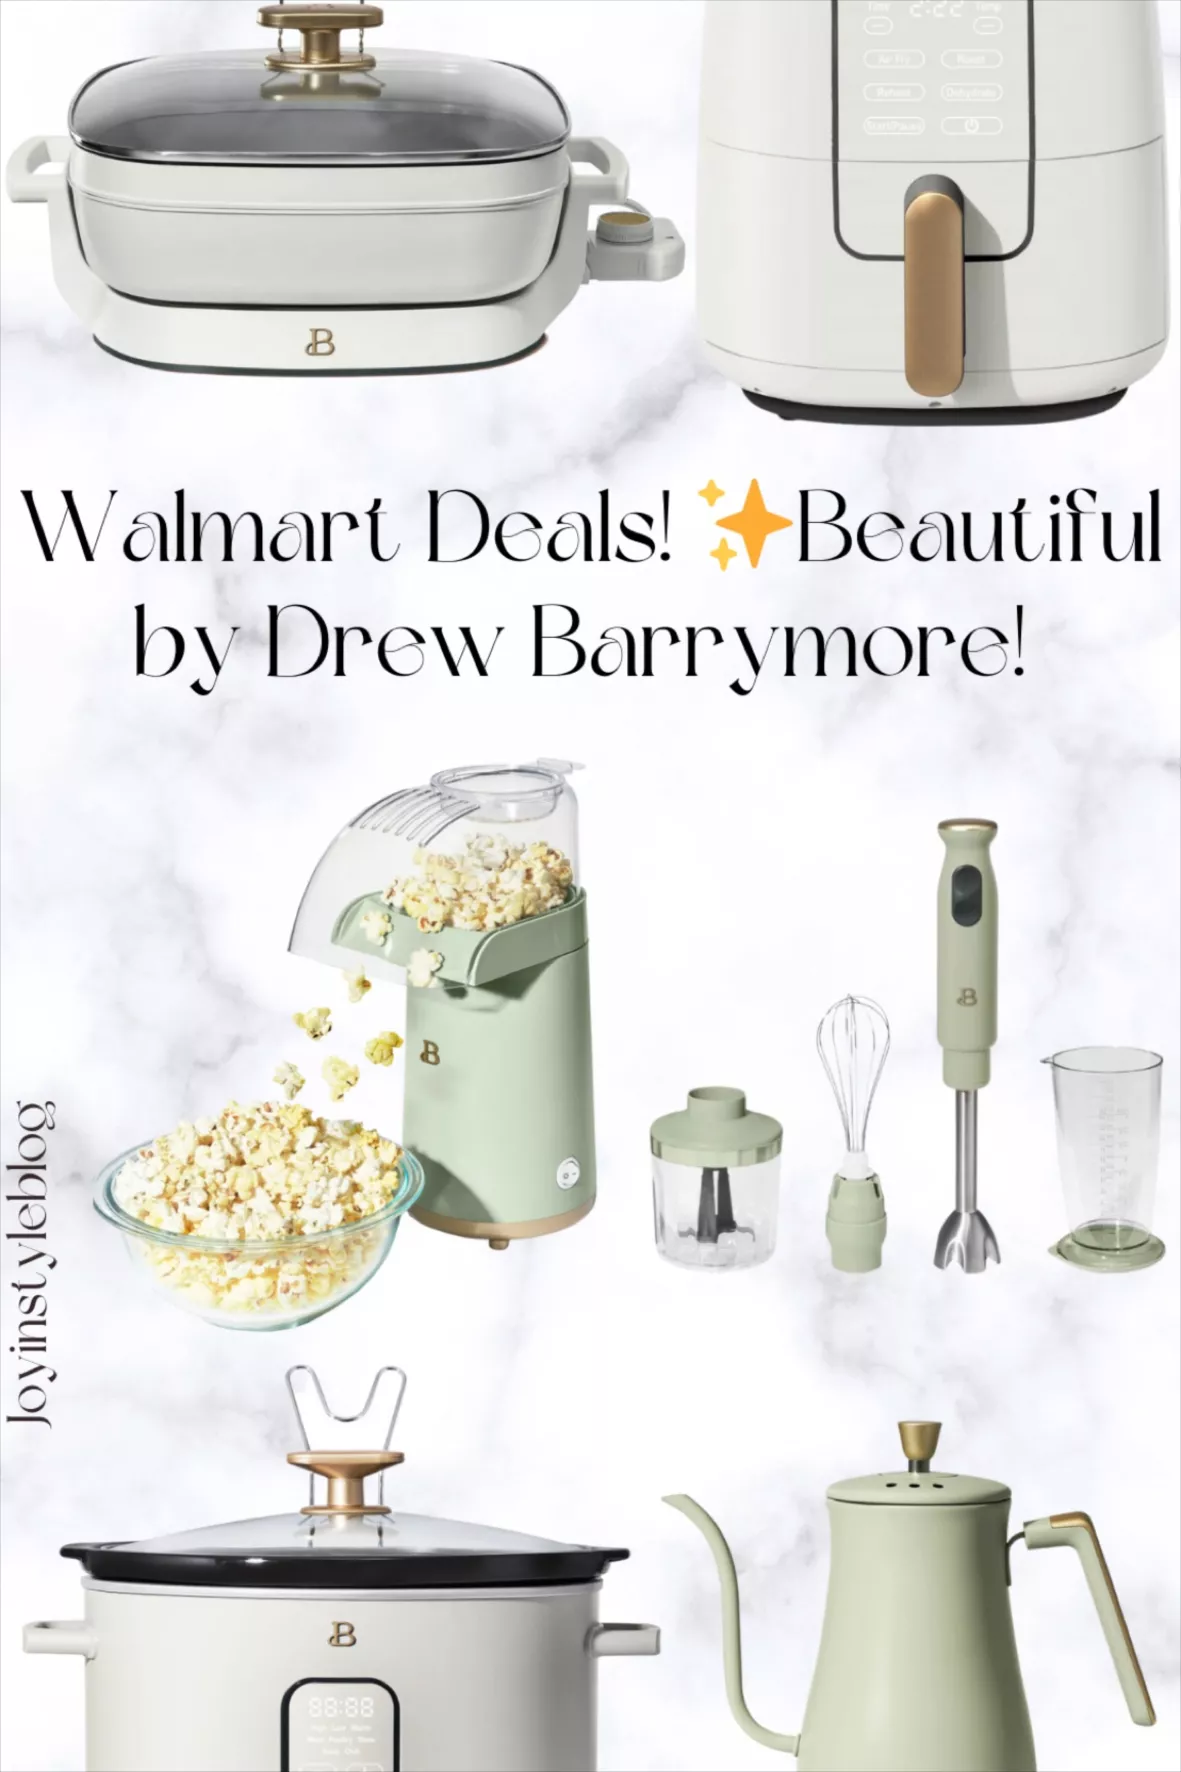 Drew Barrymore's Beautiful Electric Kettle is on sale at Walmart